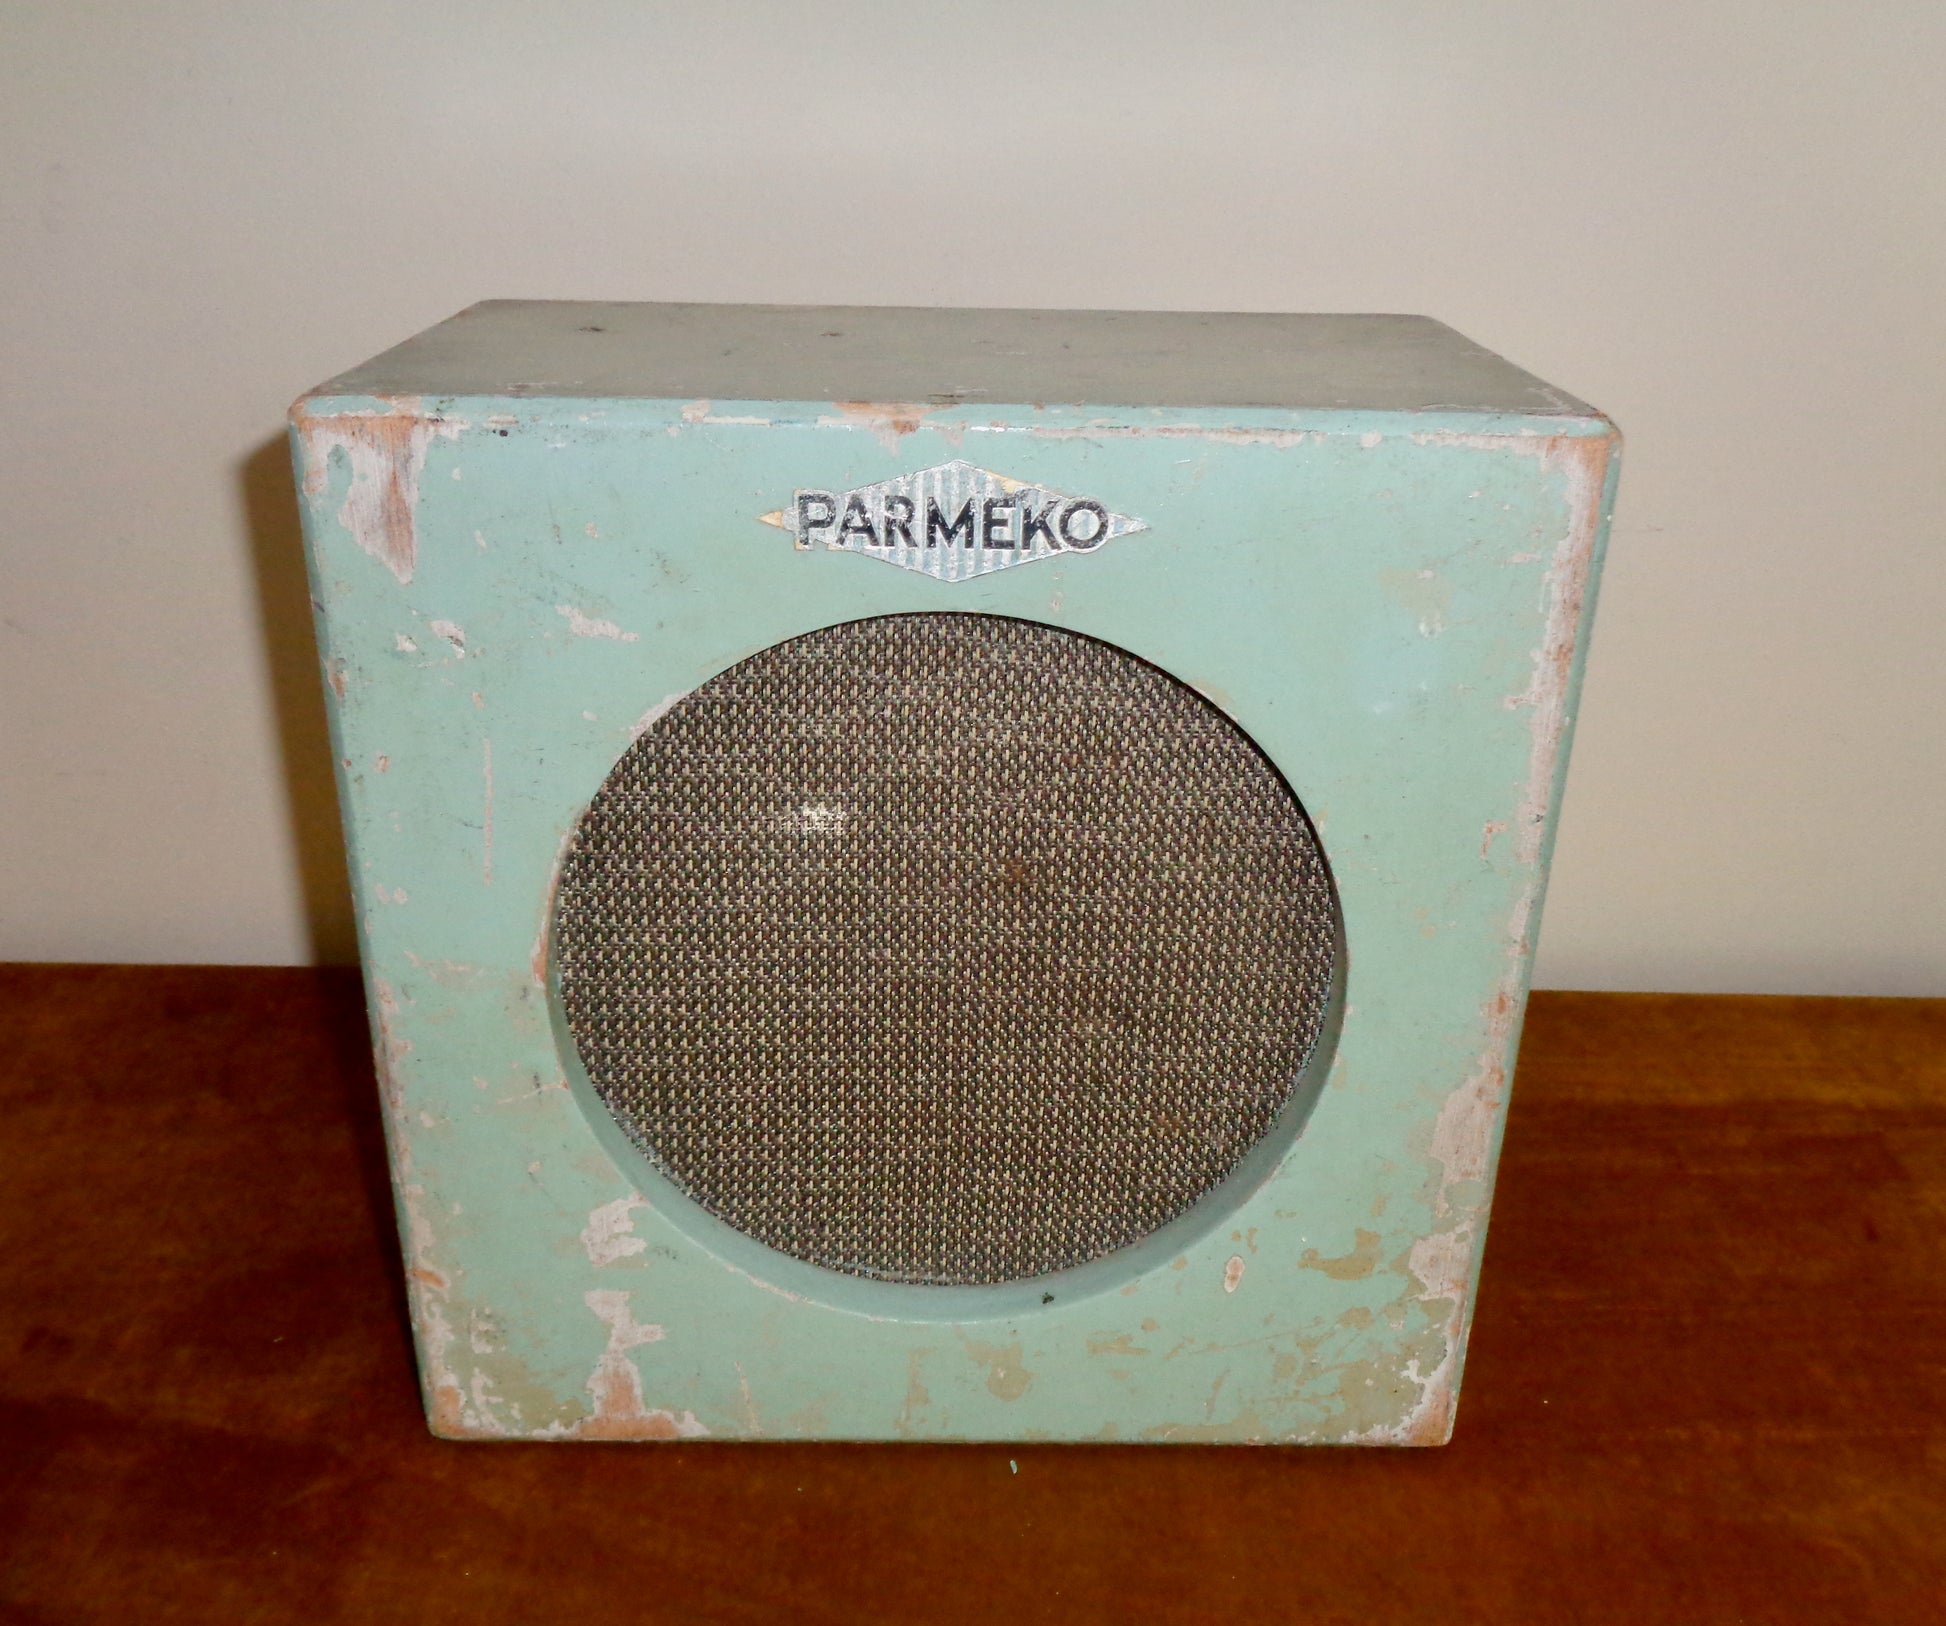 1963 Parmeko RAF Radio Loudspeaker Made For The Air Ministry 